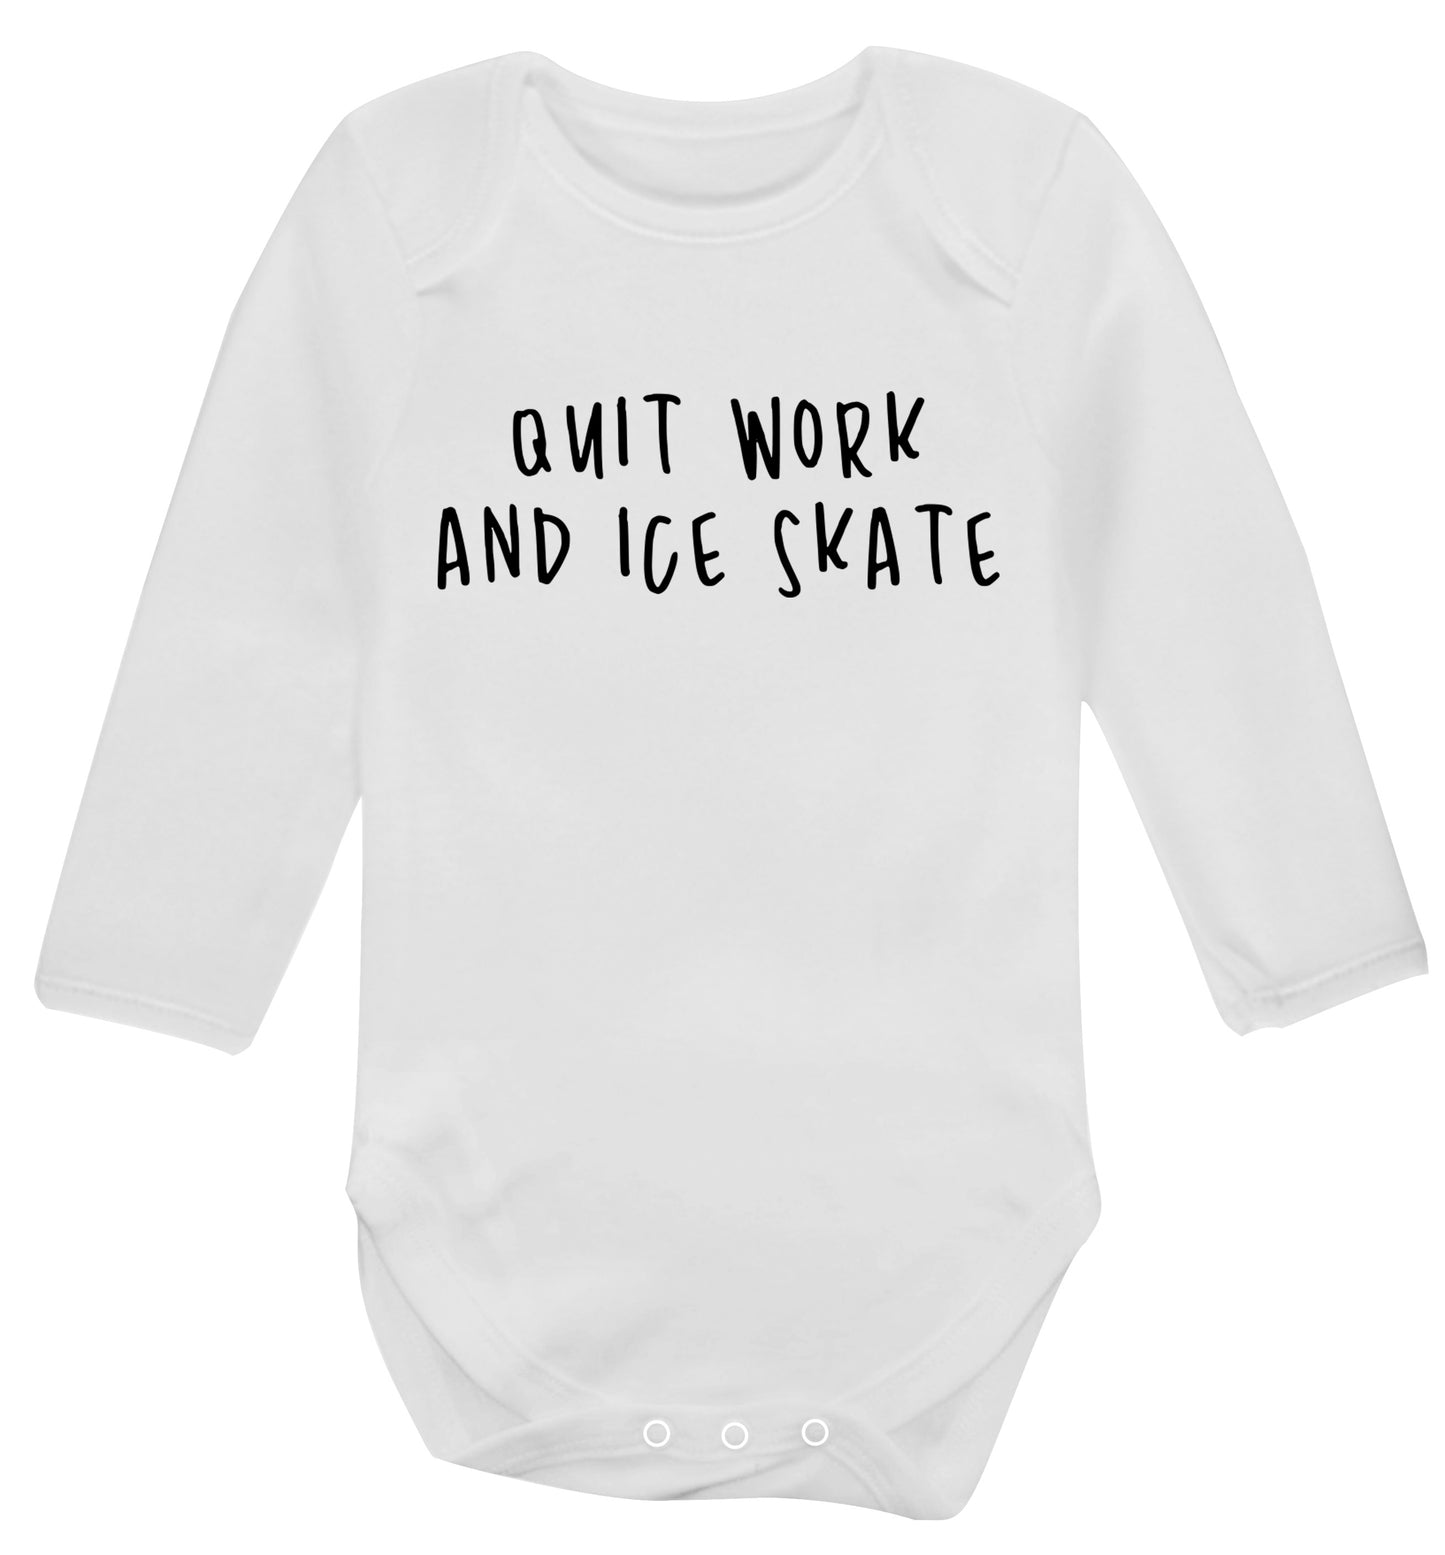 Quit work ice skate Baby Vest long sleeved white 6-12 months